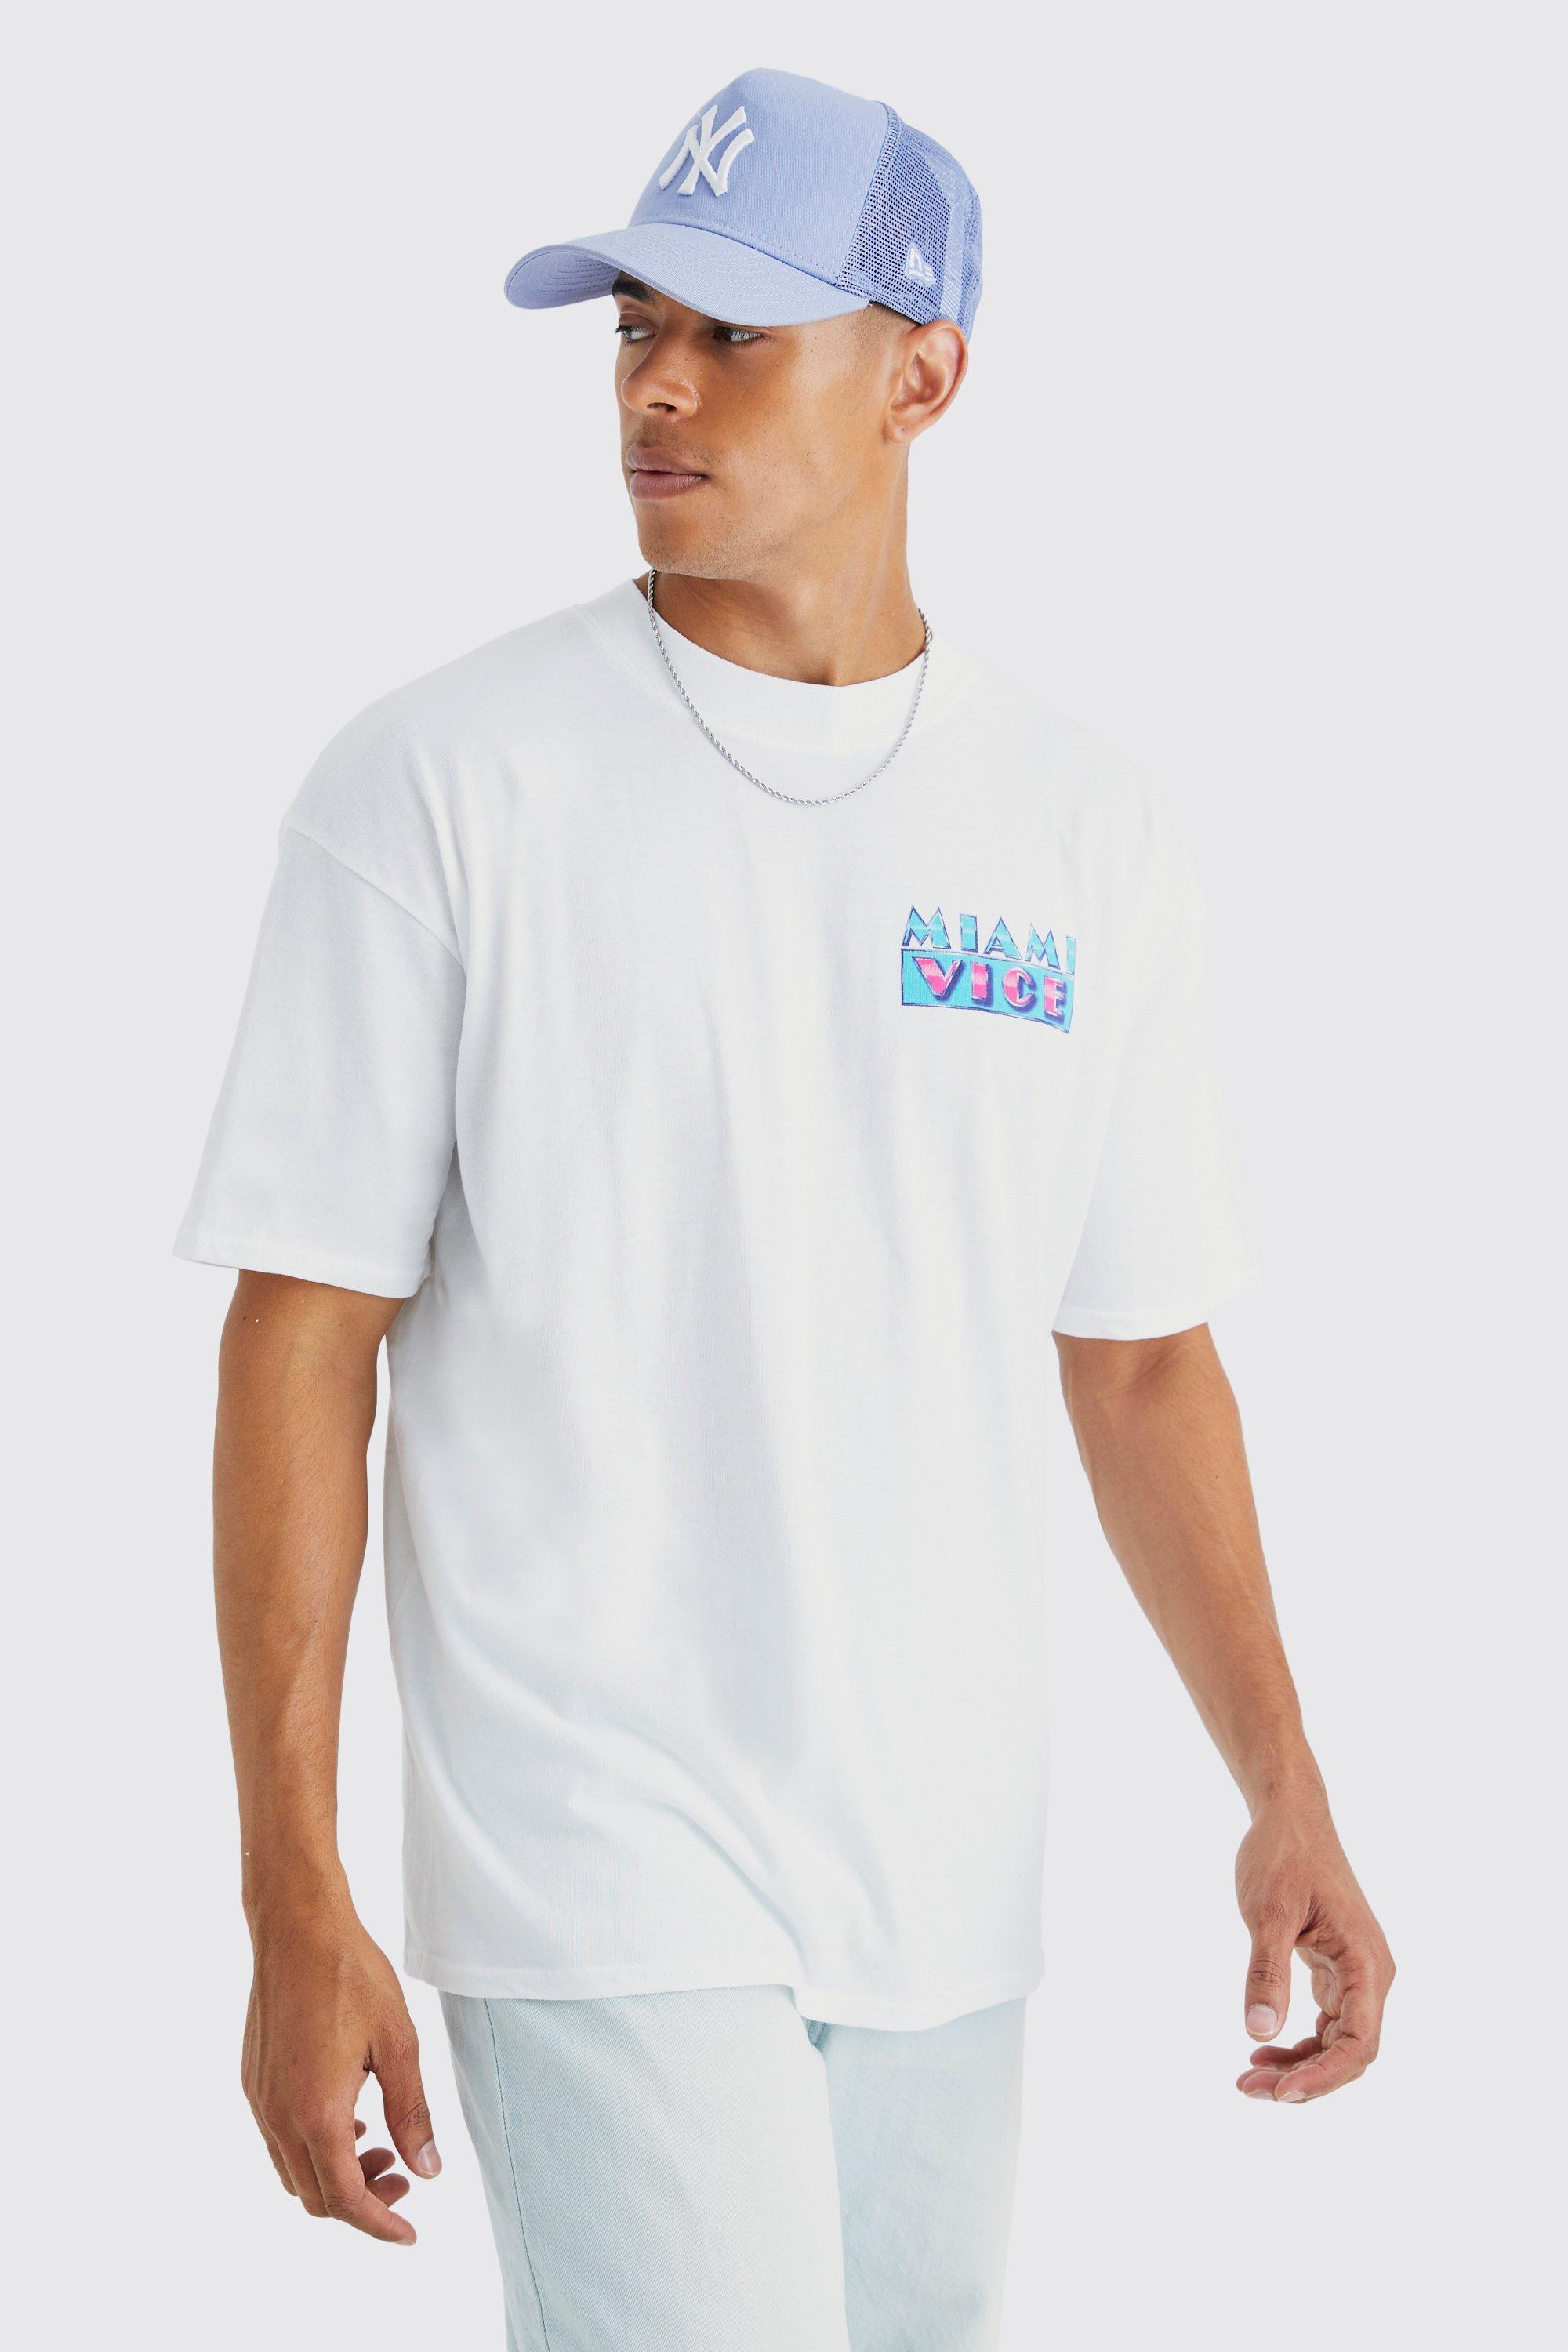 boohooMAN Oversized Miami Vice License T-Shirt